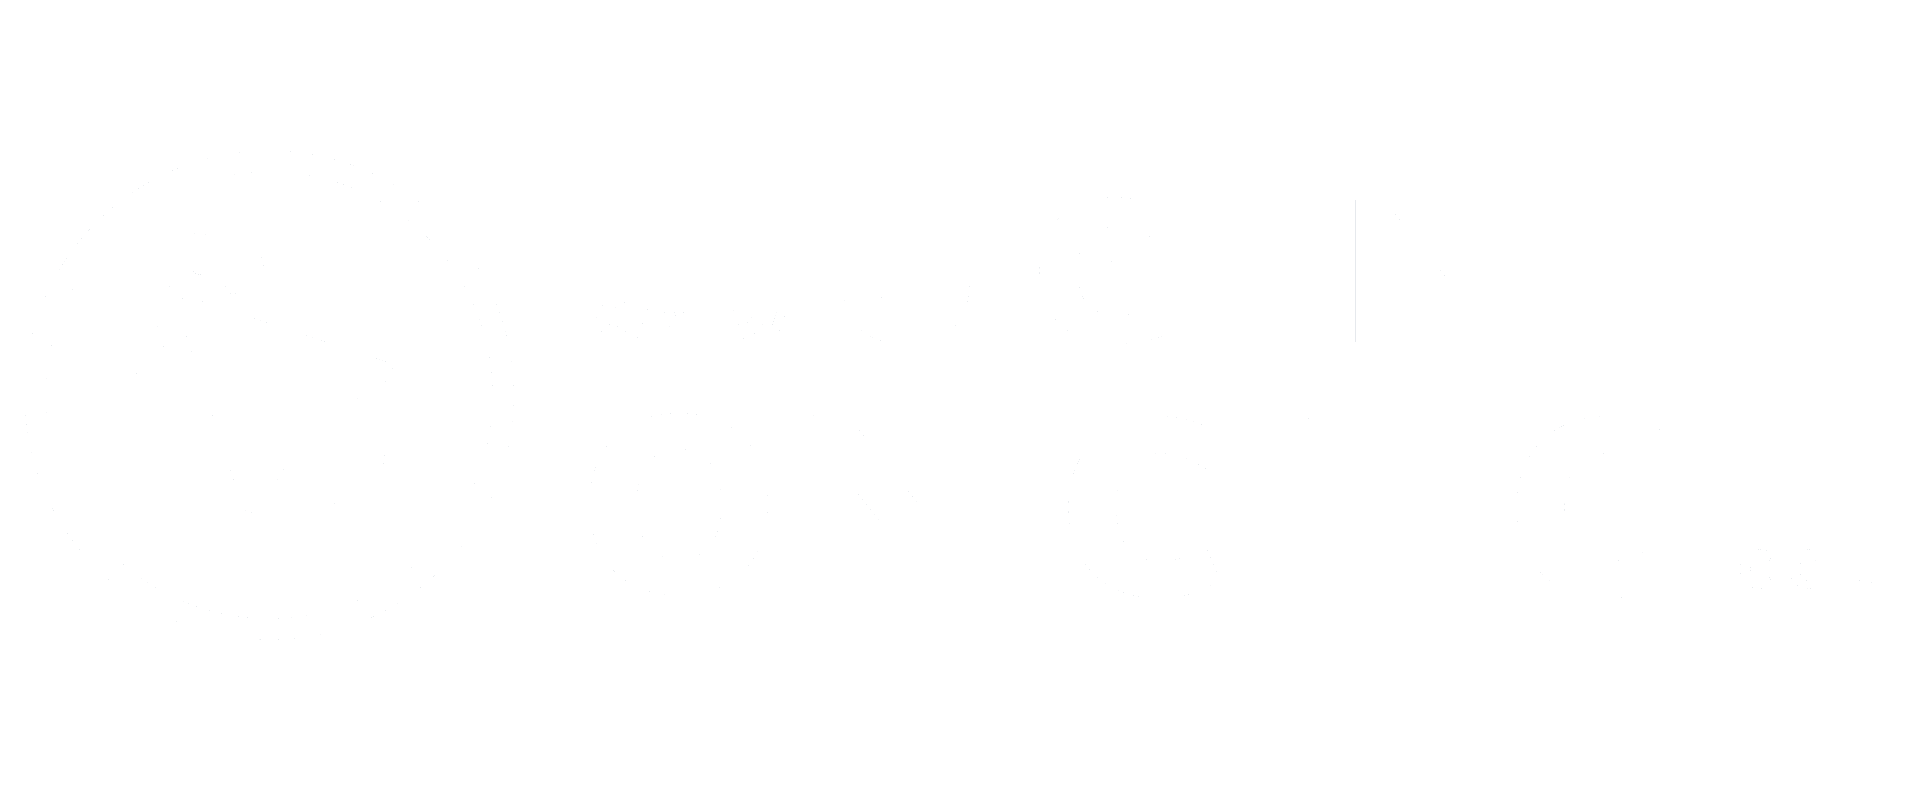 Ugine on Clic